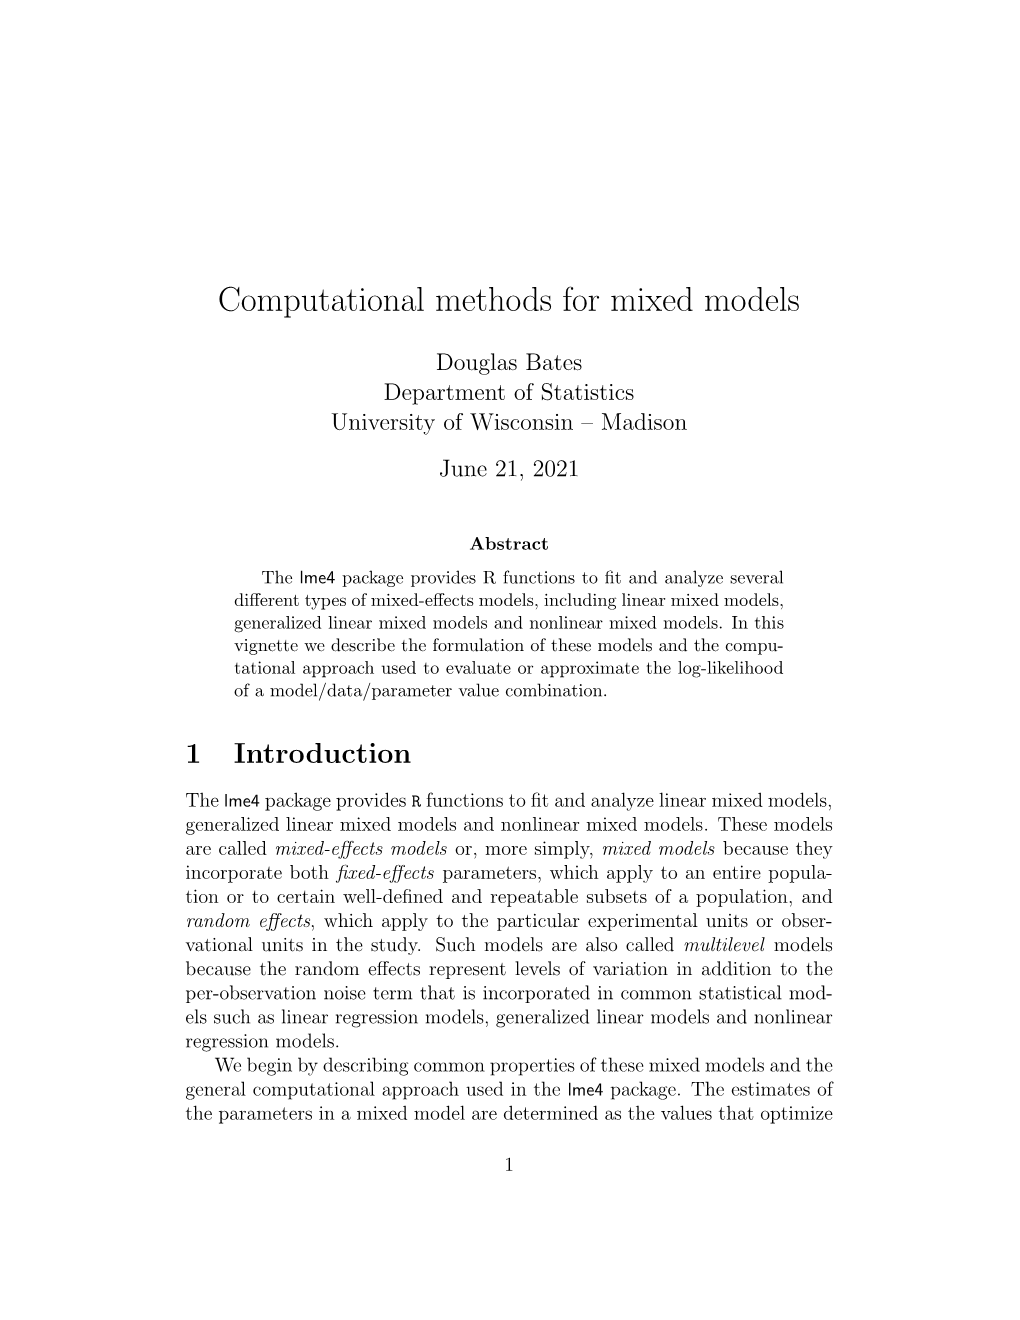 Computational Methods for Mixed Models